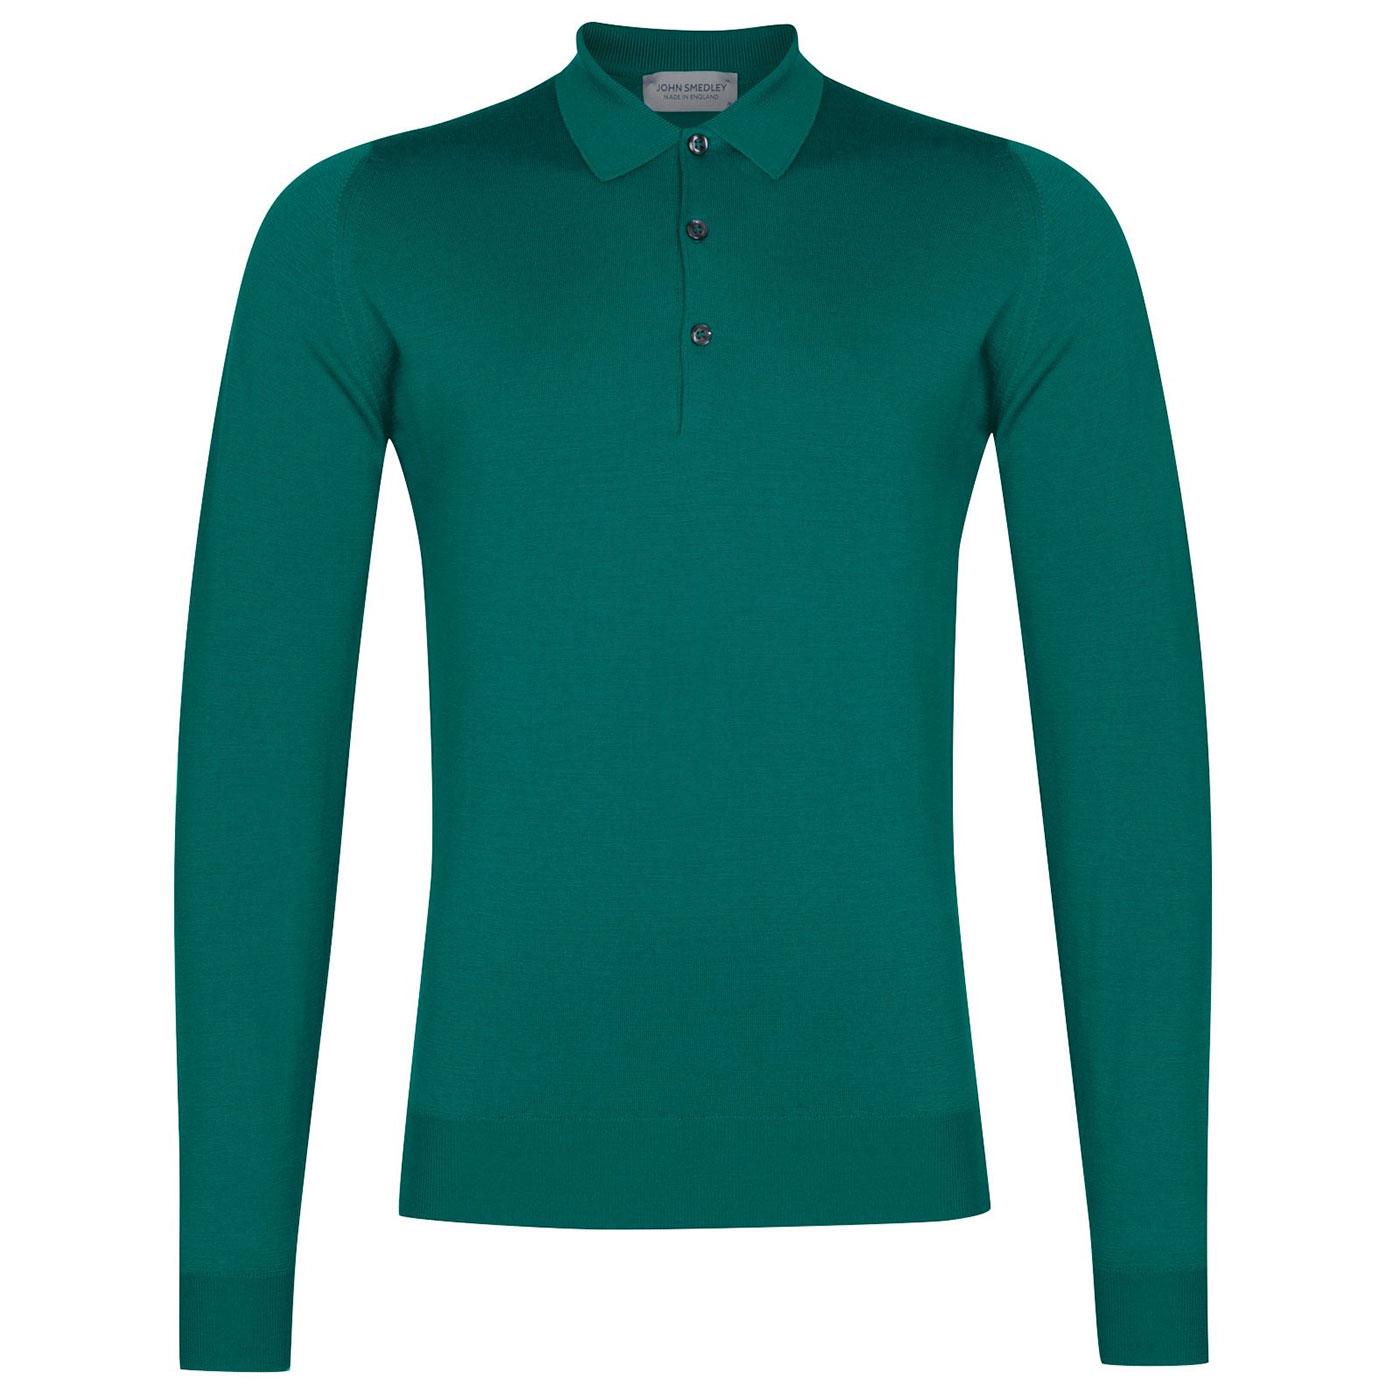 Belper JOHN SMEDLEY 60's Knitted Mod Polo Shirt LG